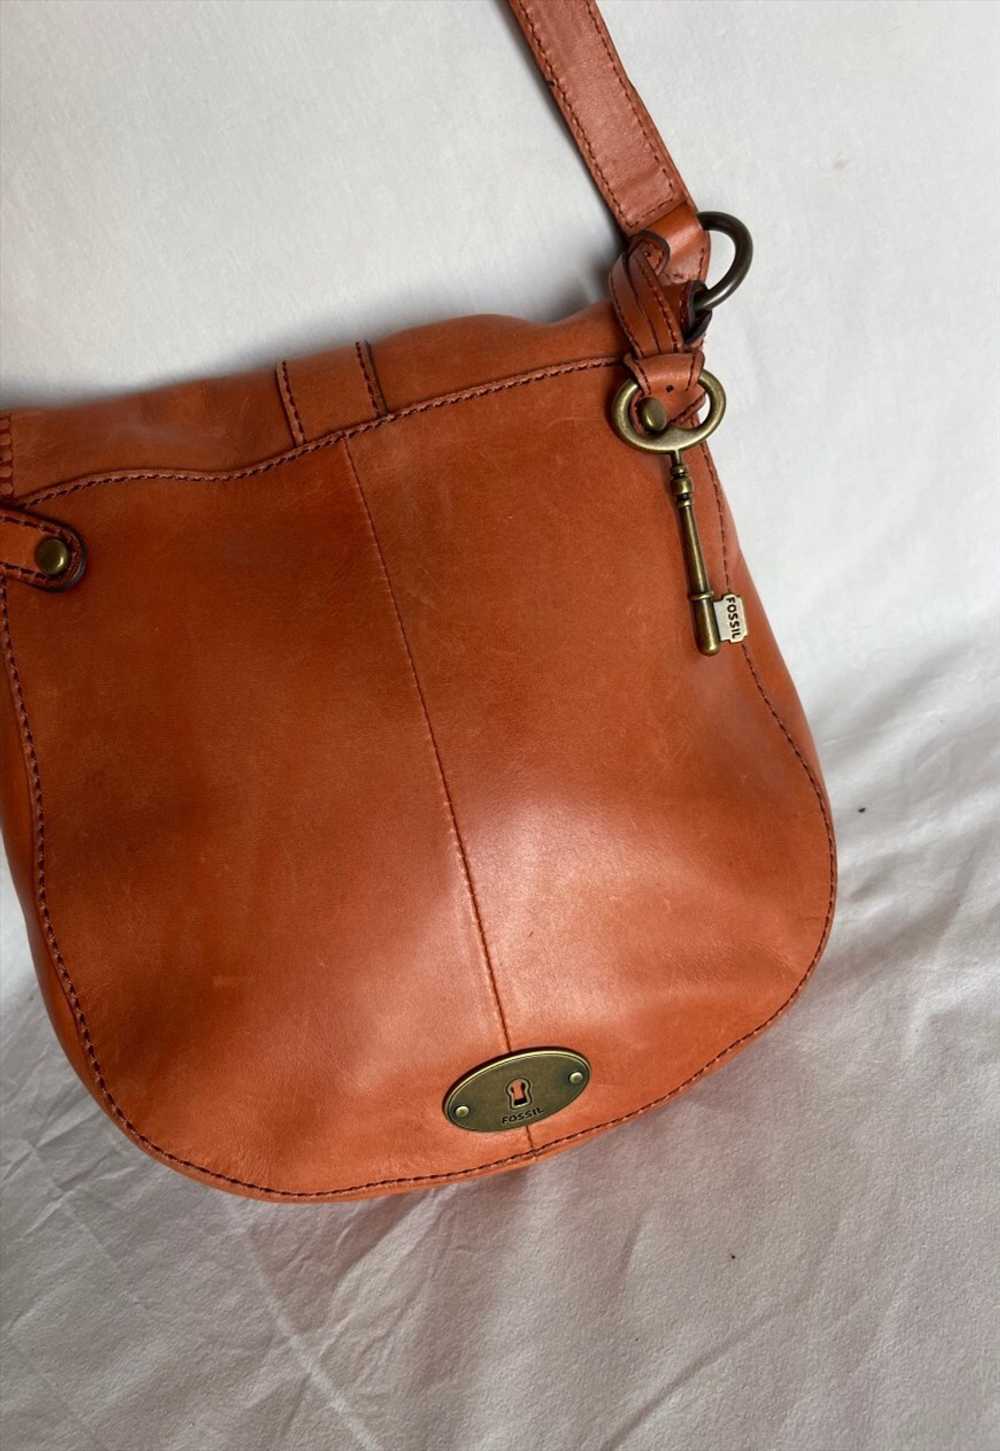 Vintage Cognac Fossil Leather Bag - image 4